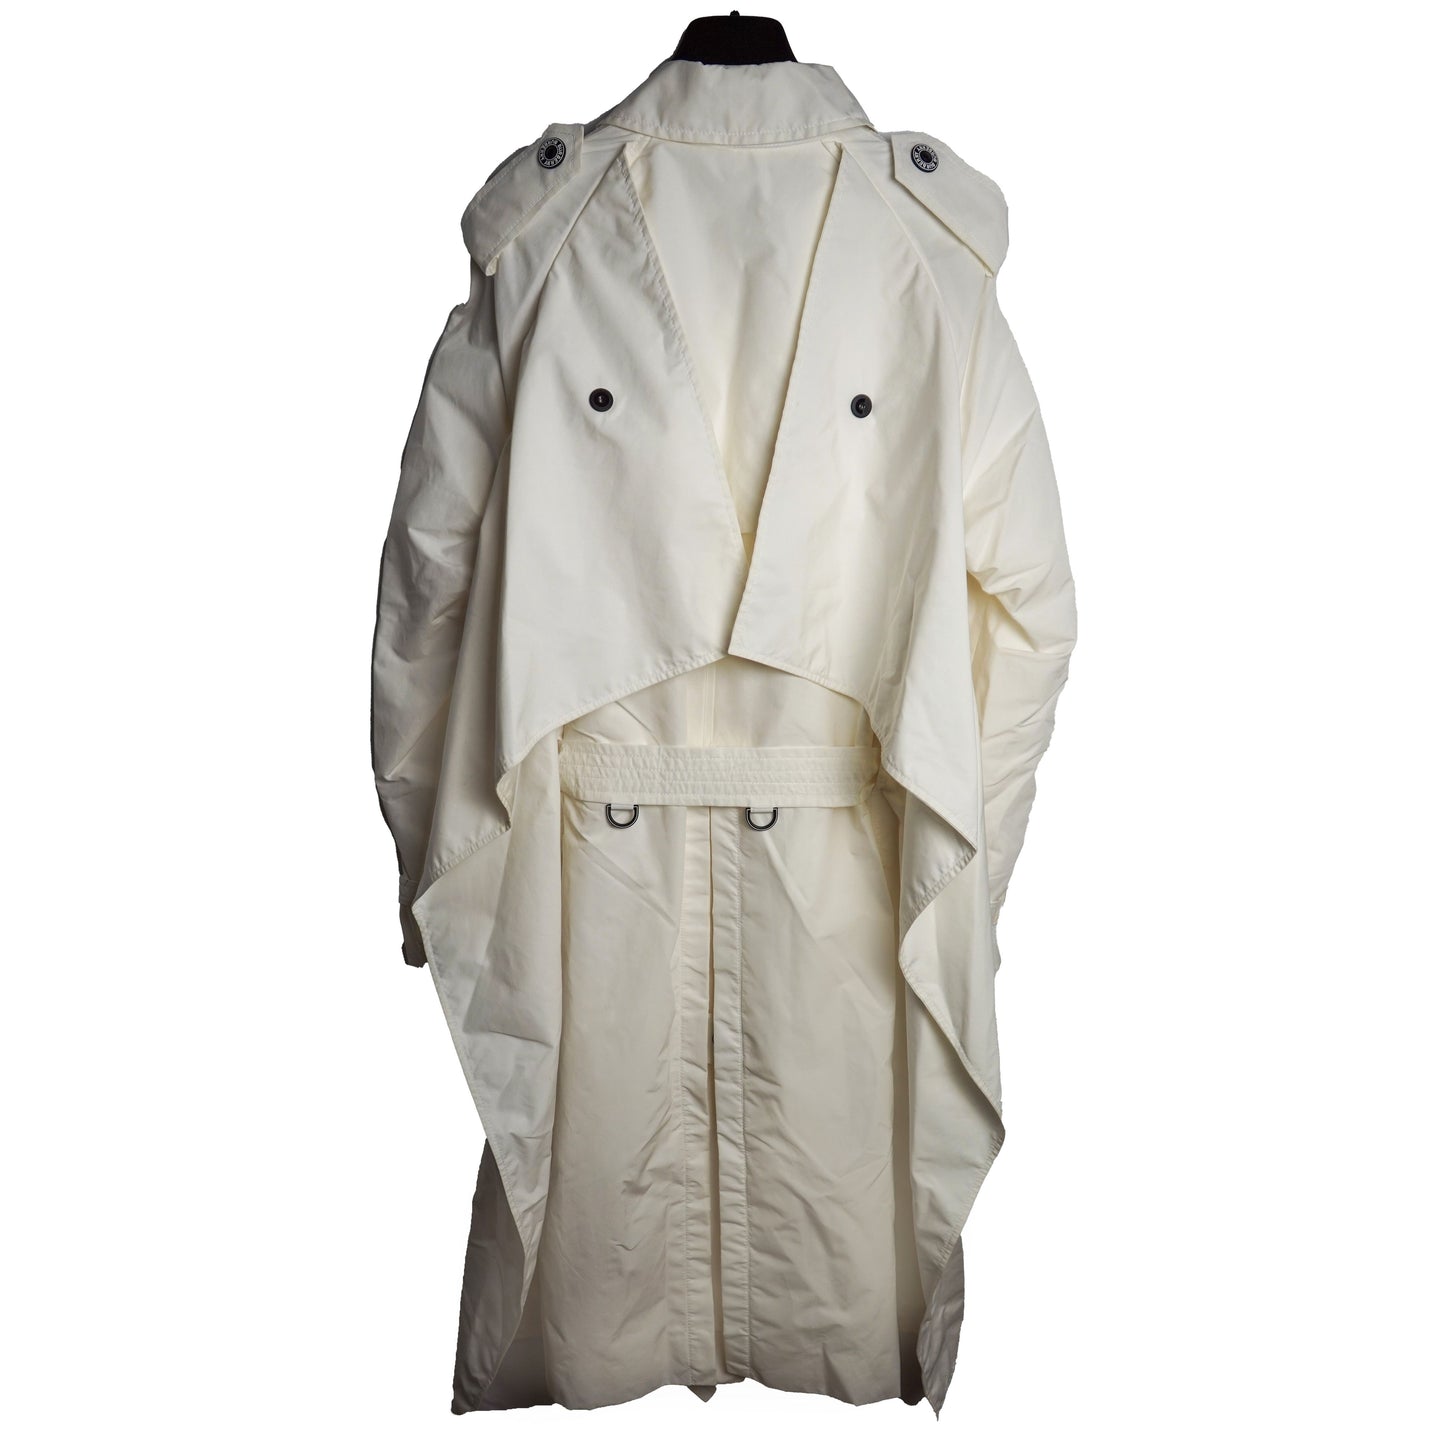 BURBERRY Waterproof trench coat size 46